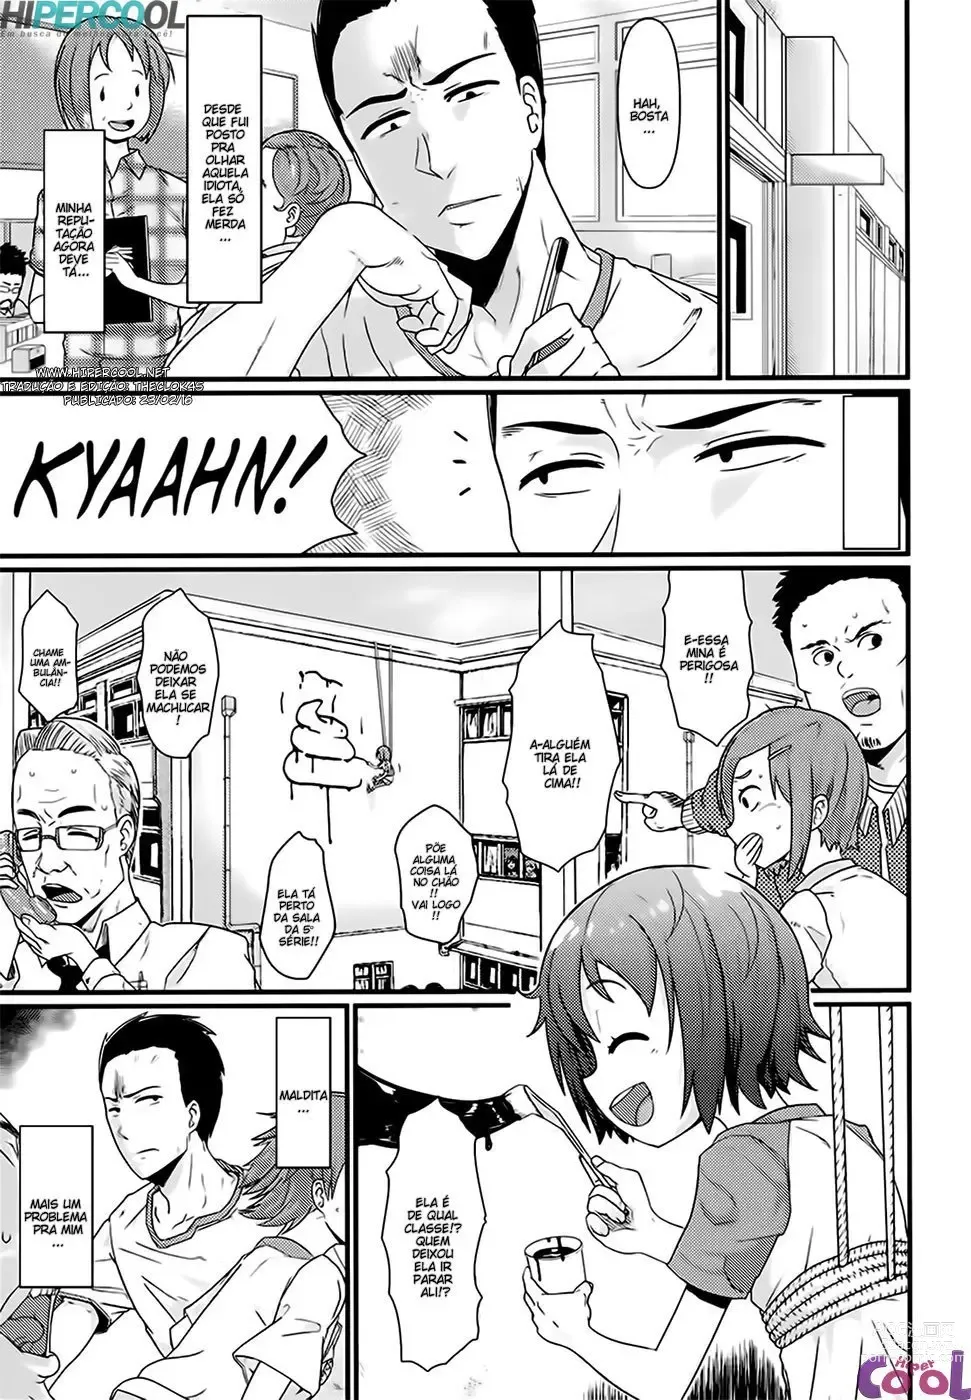 Page 3 of doujinshi An Idiot's Discipline!